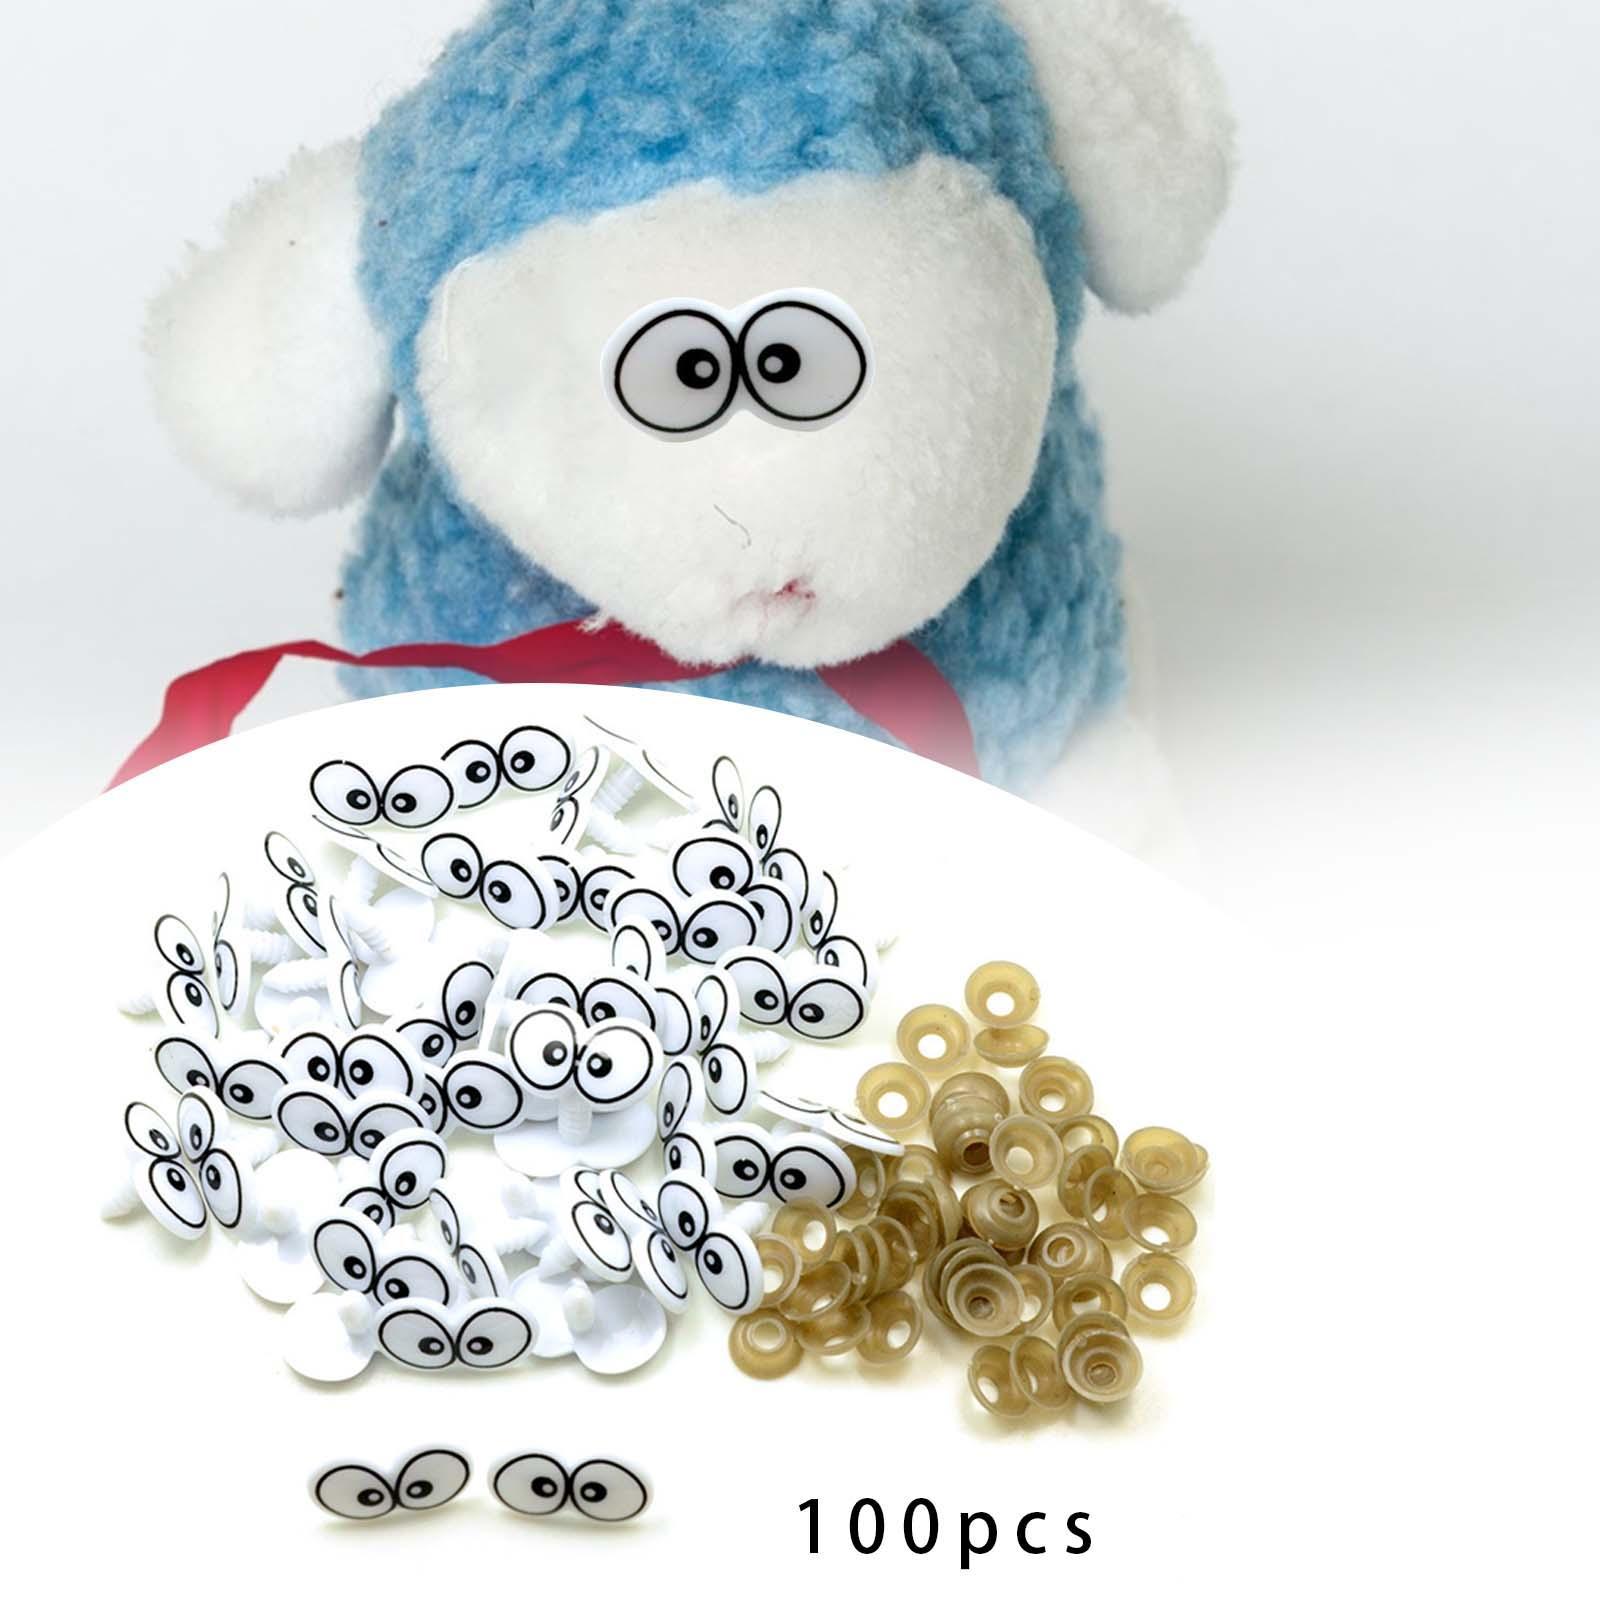 100pcs Cartoon Eyes Doll Toys Making Stuffed Animal Crafts Making for Teddy Bear Projects Supplies Animal Doll Stuffed Eyes